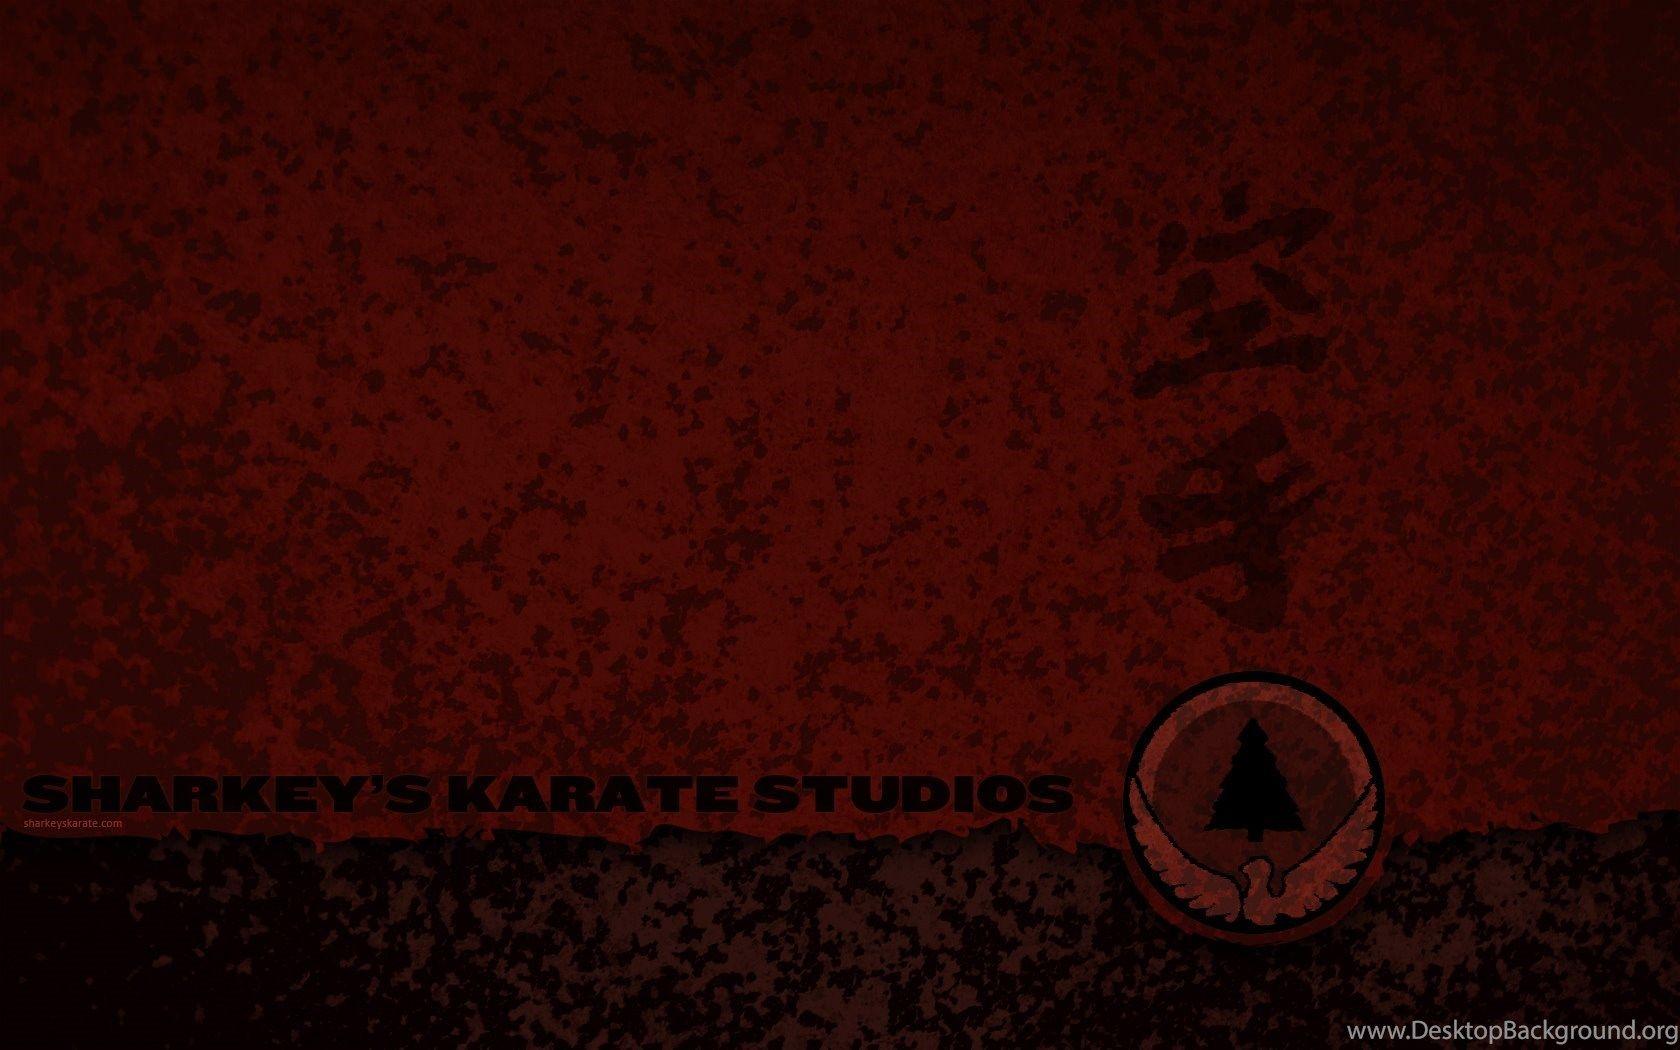 Wallpaper Karate Sharkey S Studios 1680x1050 Desktop Background